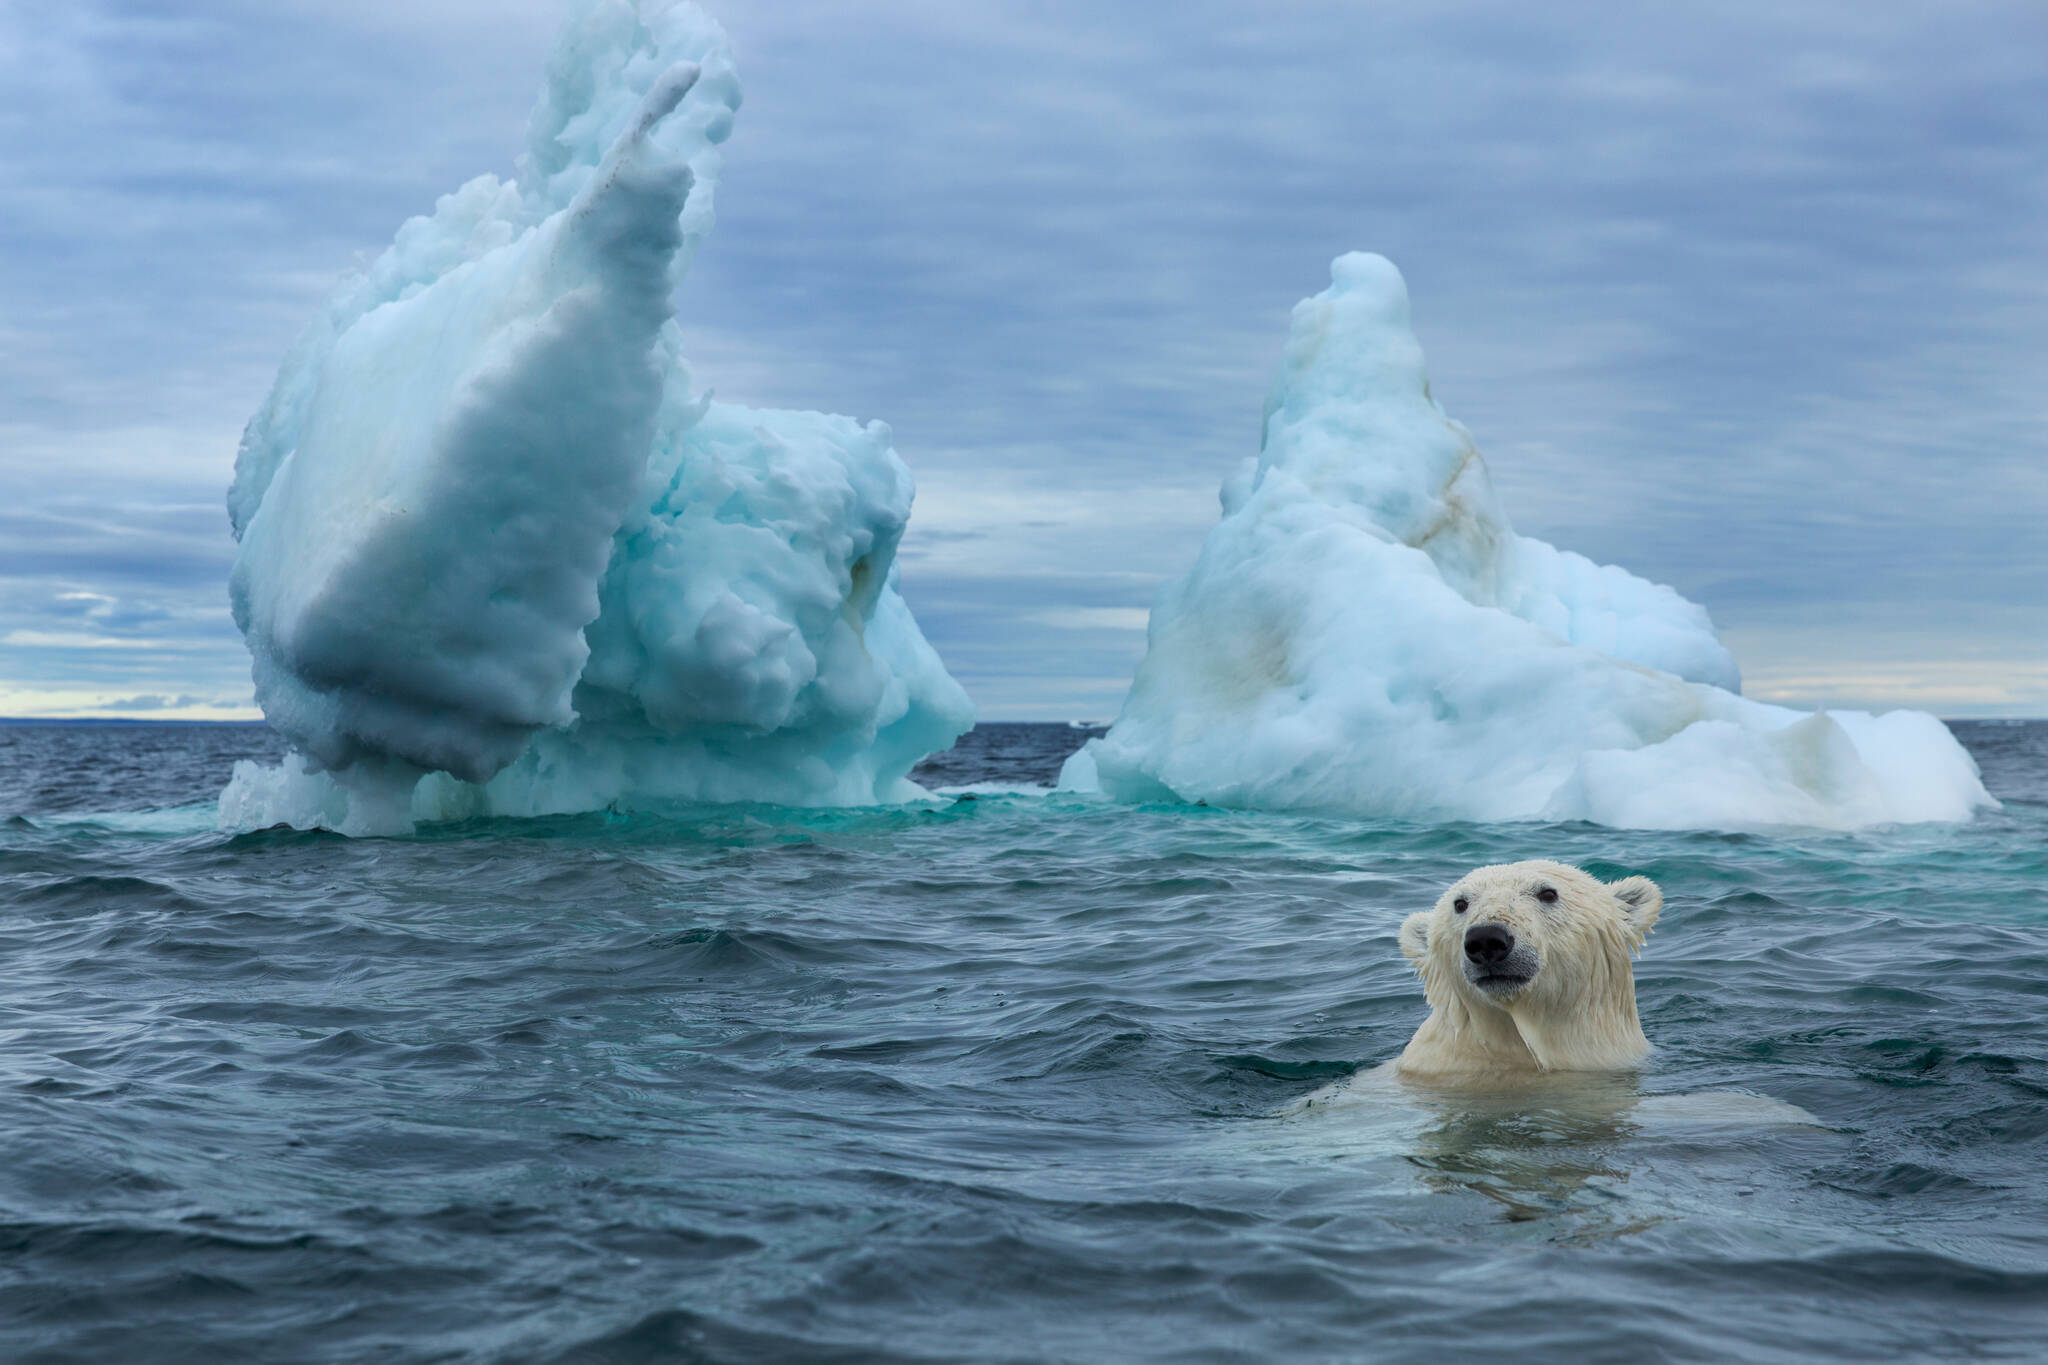 Photo by Paul Souder
A polar bear swims near the Arctic Circle along Hudson Bay in the Nunavut Territory of Canada.